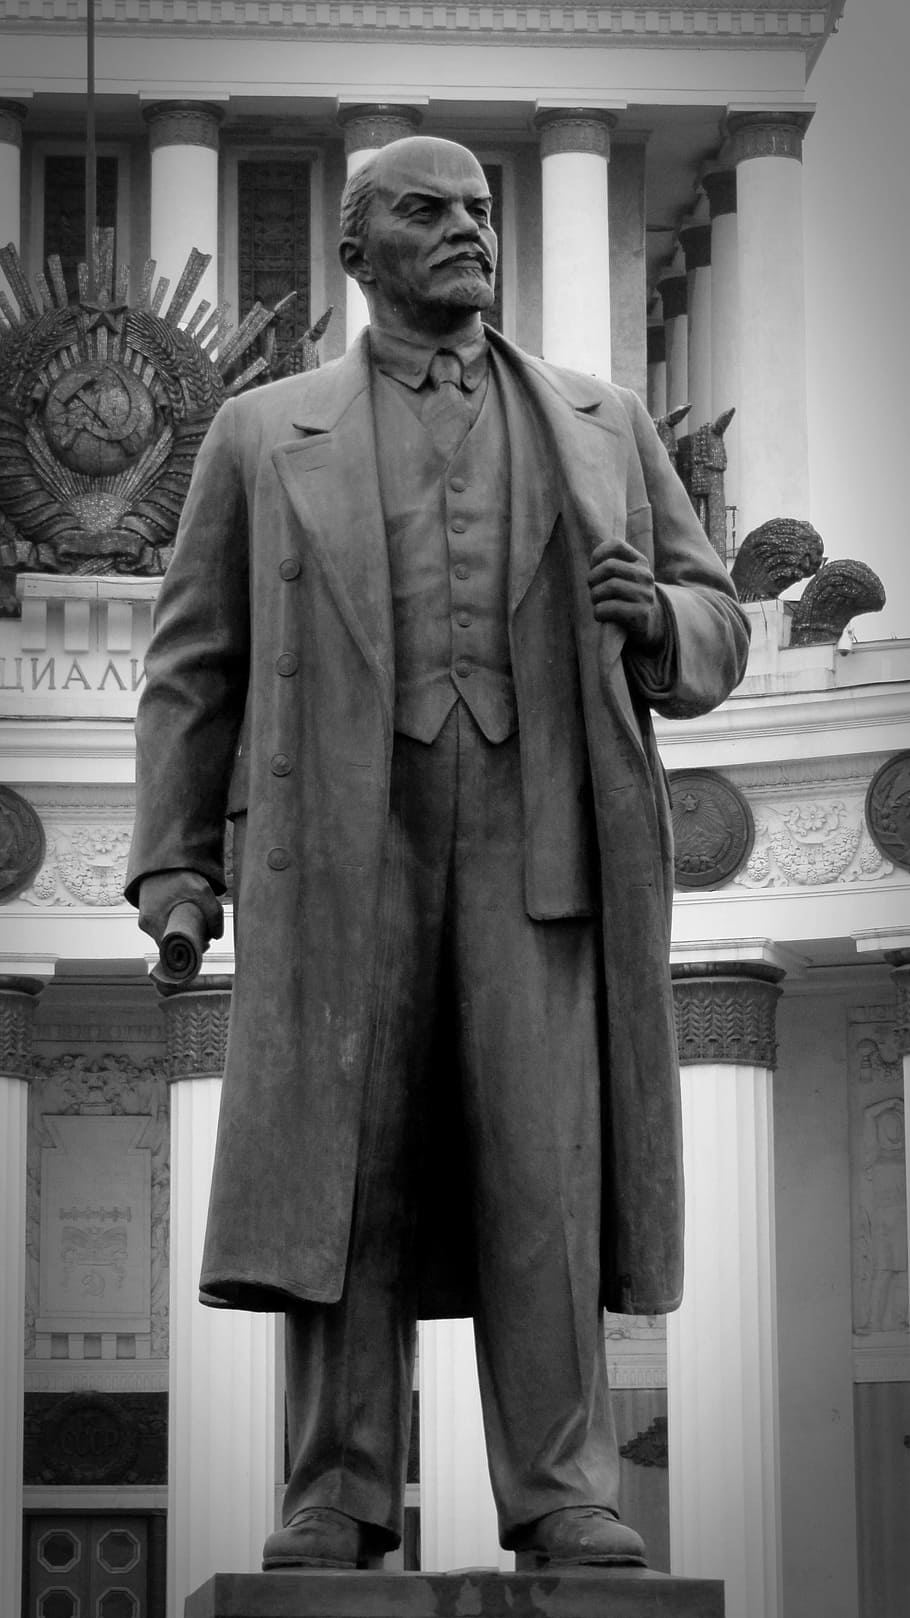 moskow, lenin, secara historis, uni soviet, patung, monumen, berdiri, arsitektur, satu orang, representasi manusia